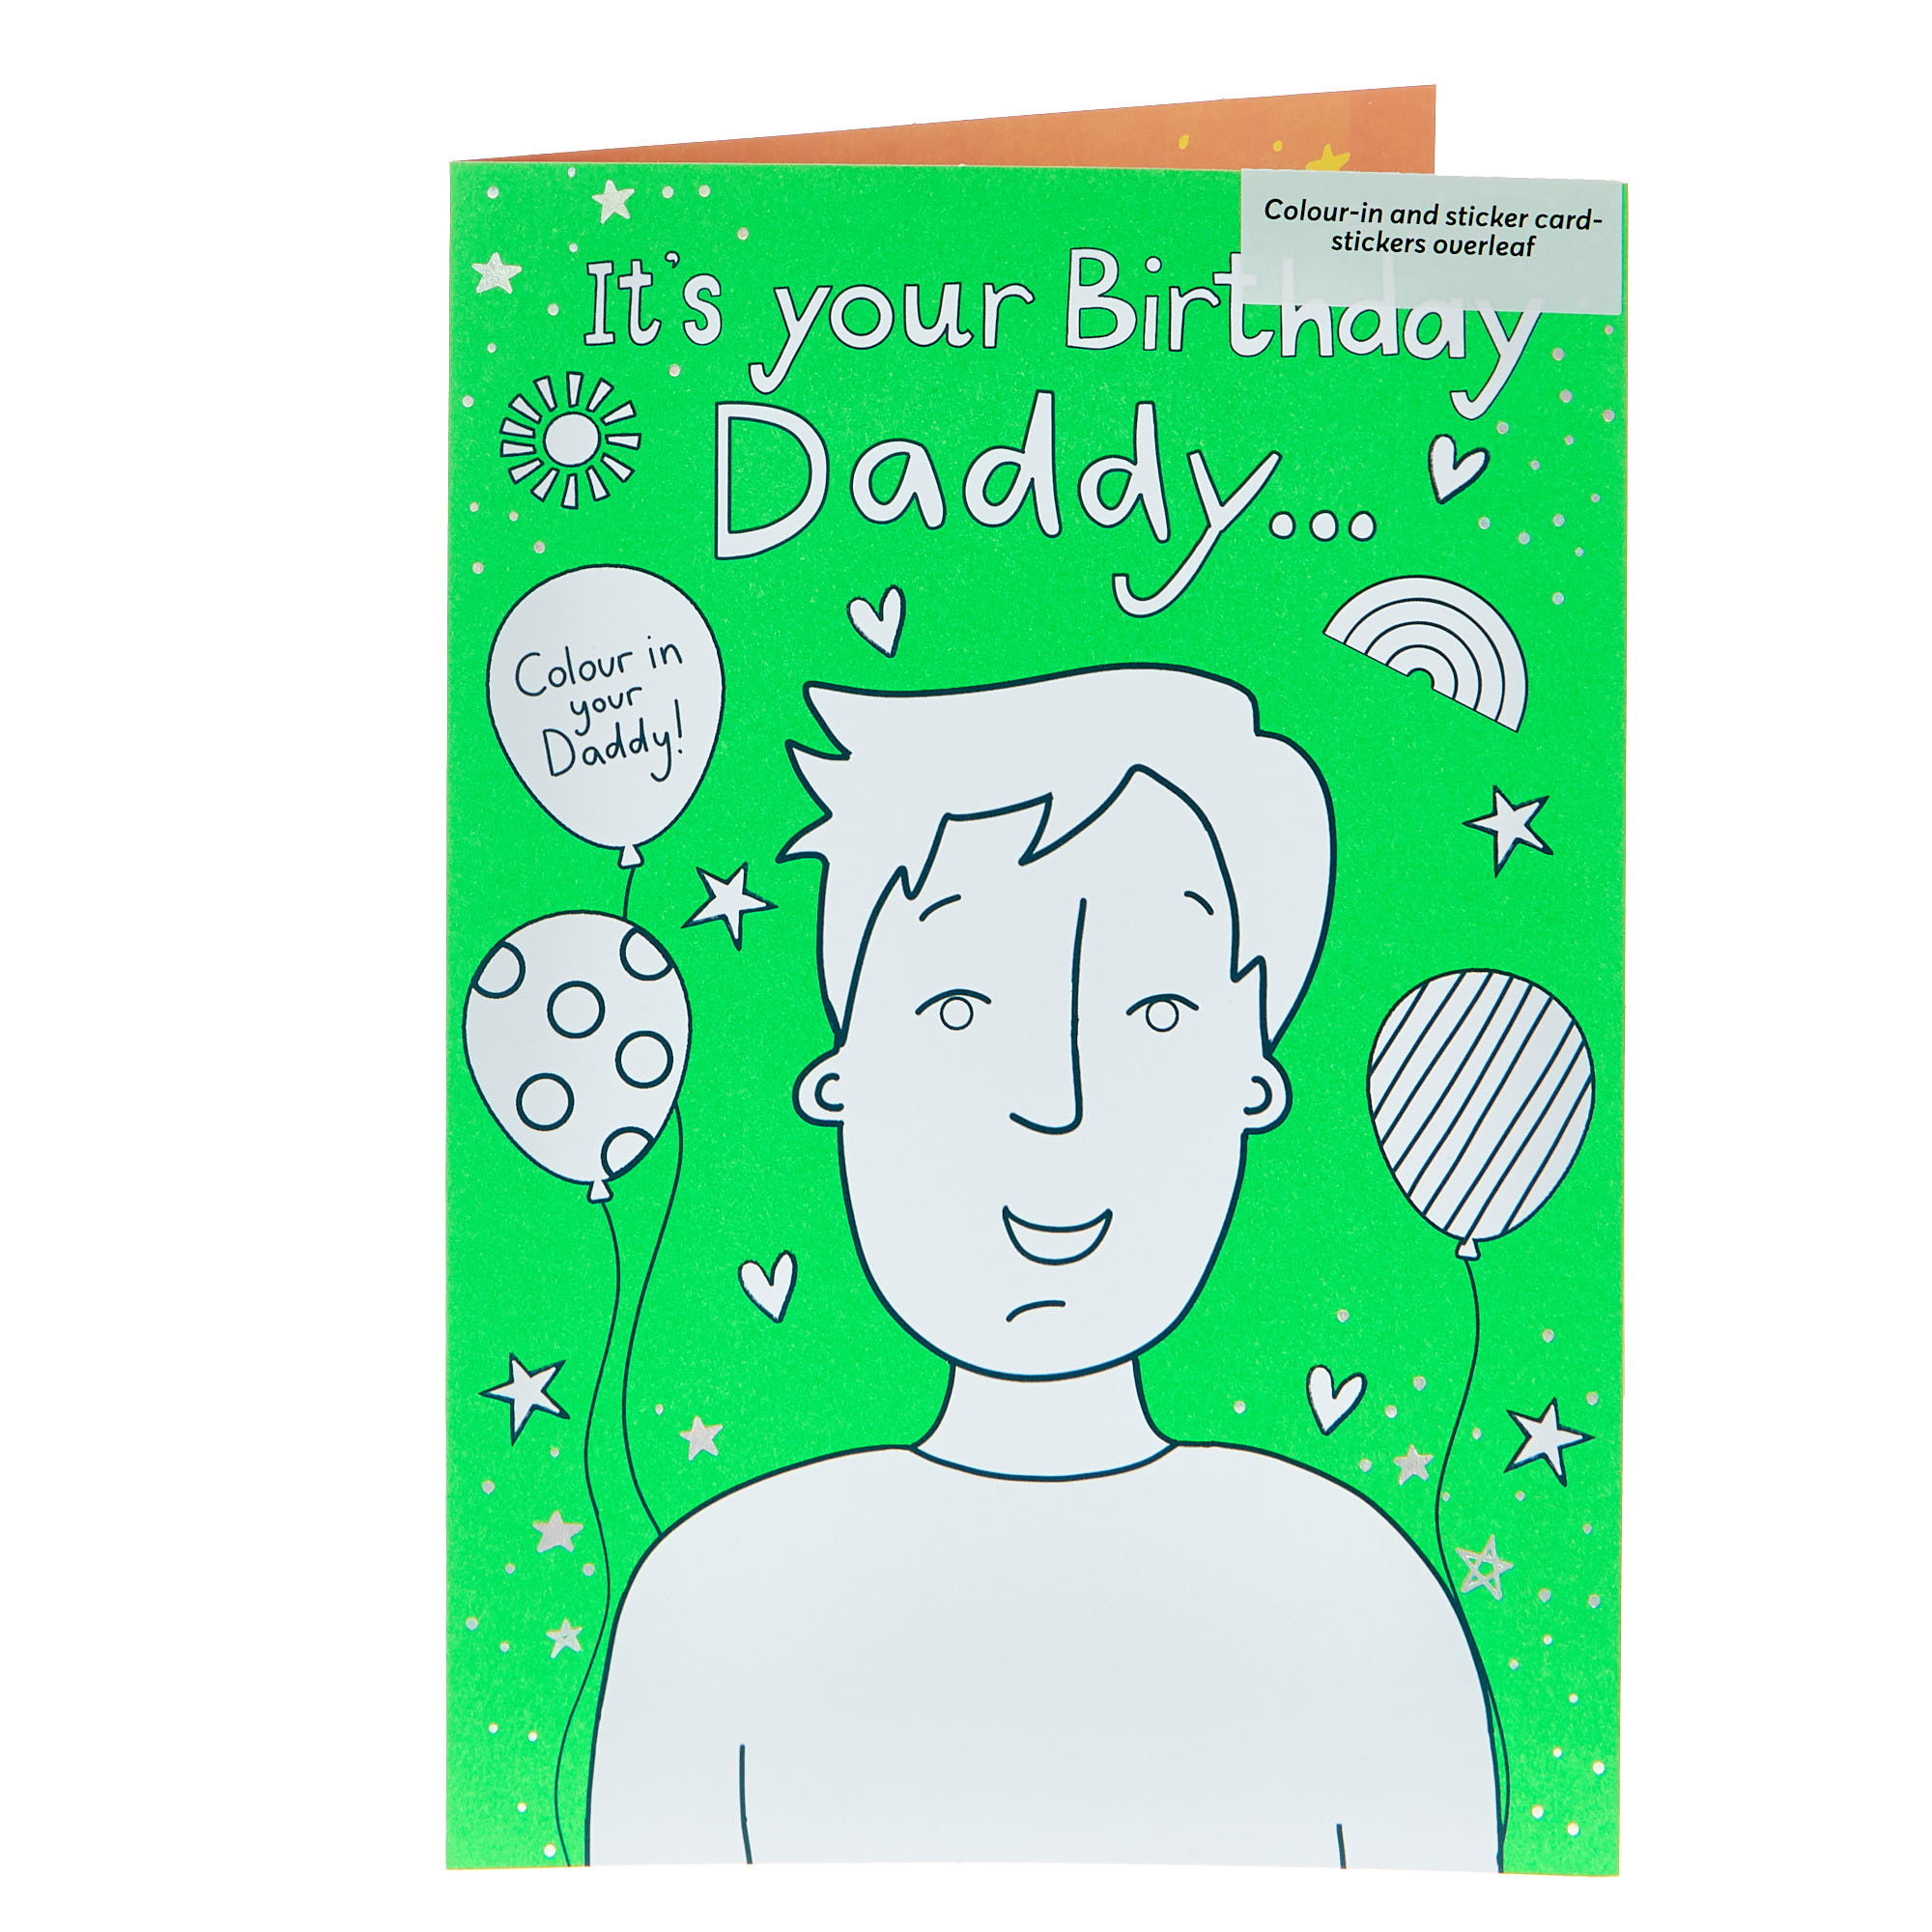 Daddy Colour-In & Sticker Birthday Card